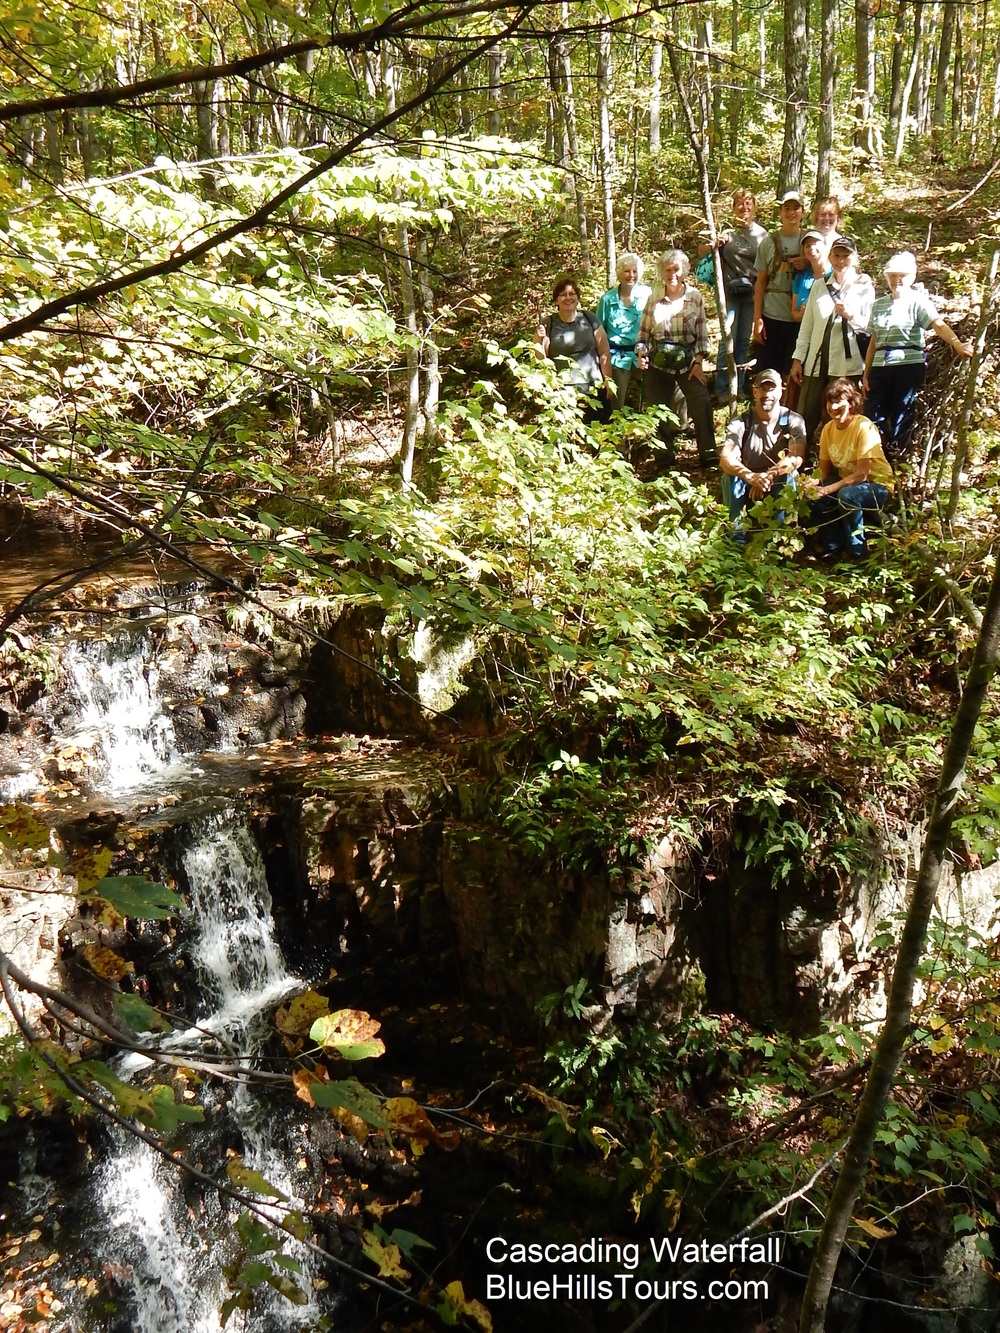 Group Cascading Waterfall Leaf it 2015.jpg